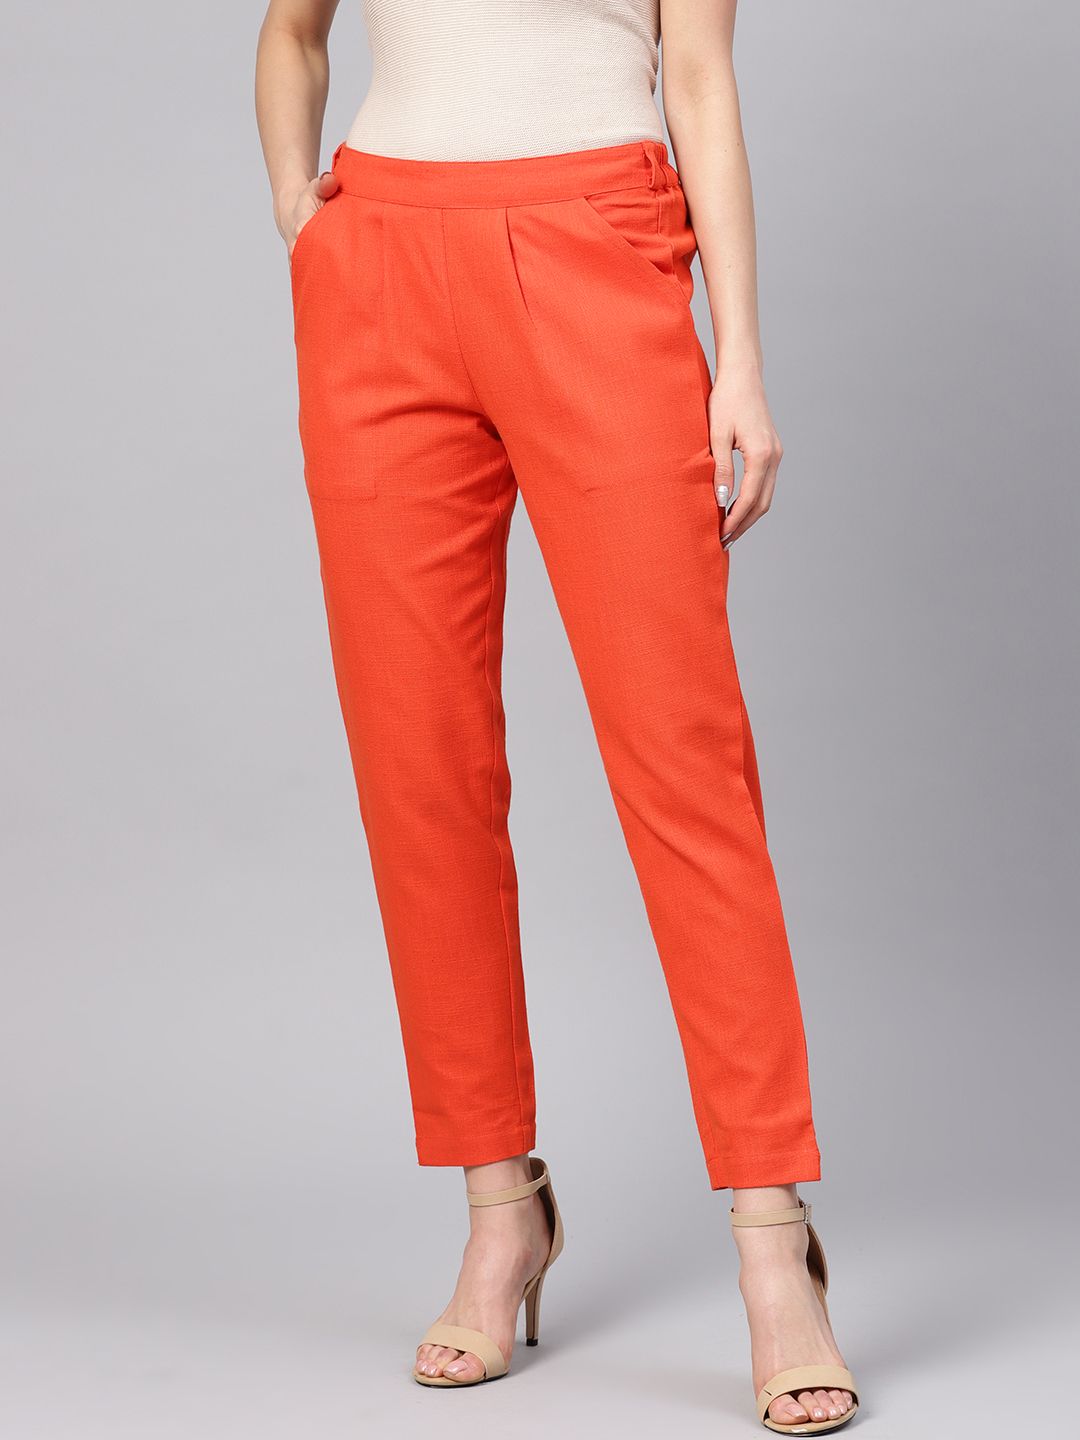 Jaipur Kurti Women Orange Regular Fit Solid Trousers Price in India